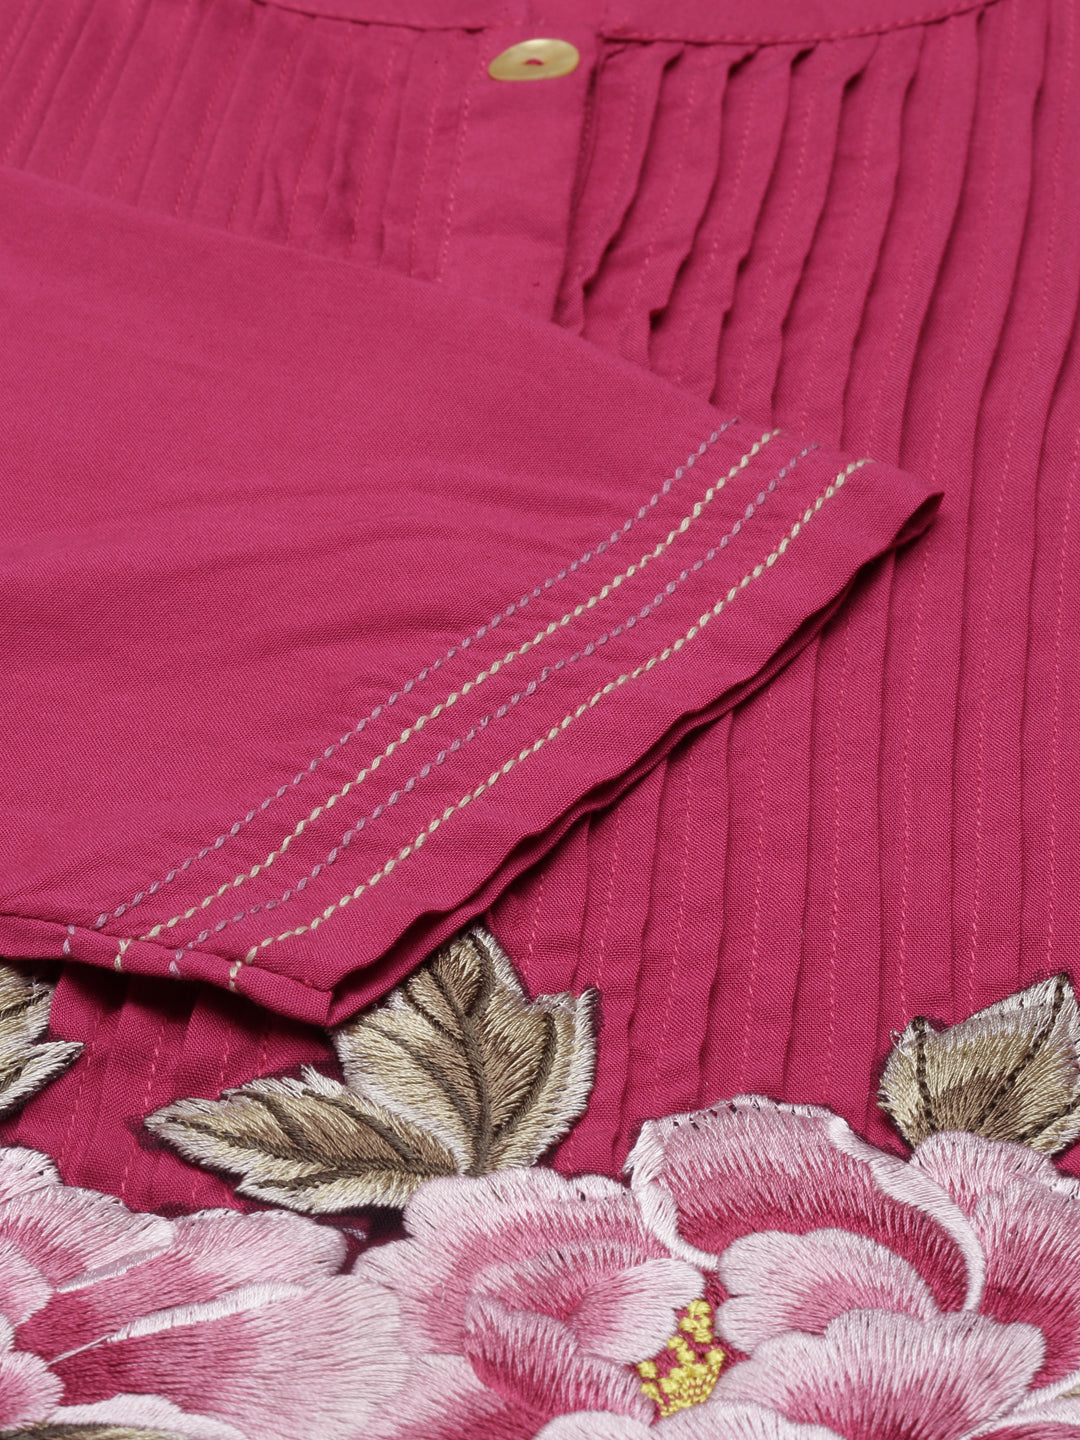 Neeru's Rani Pink Color Rayon Fabric Kurta